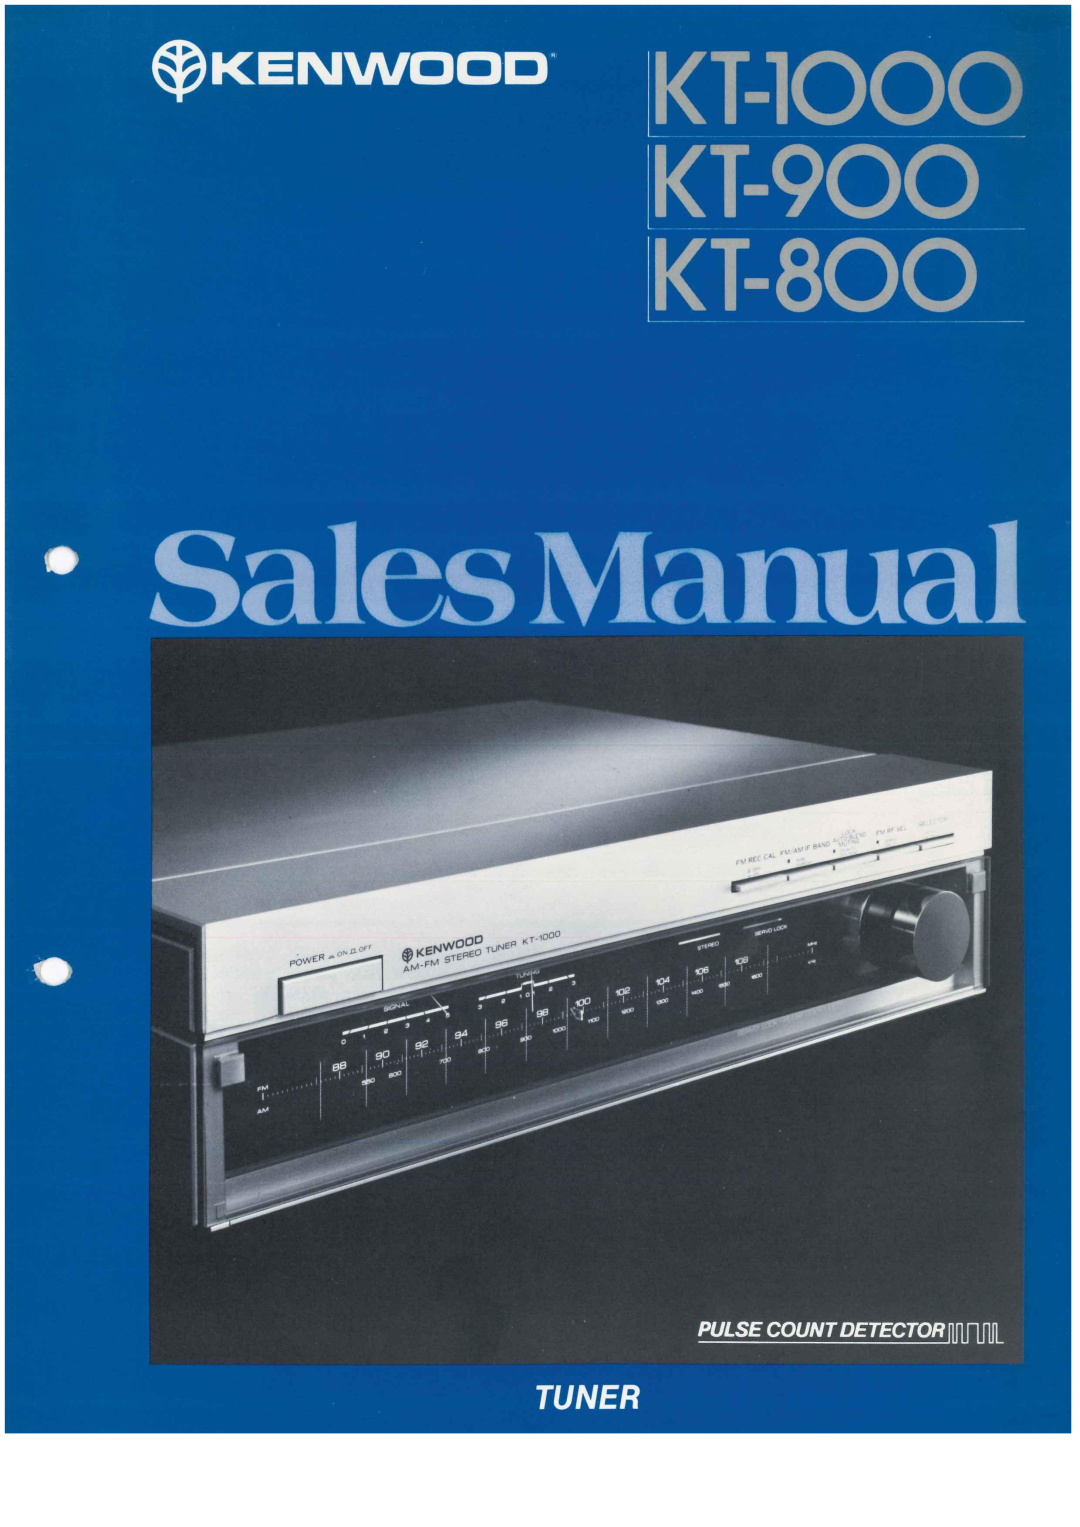 Kenwood KT-1000 manual SalesManual 